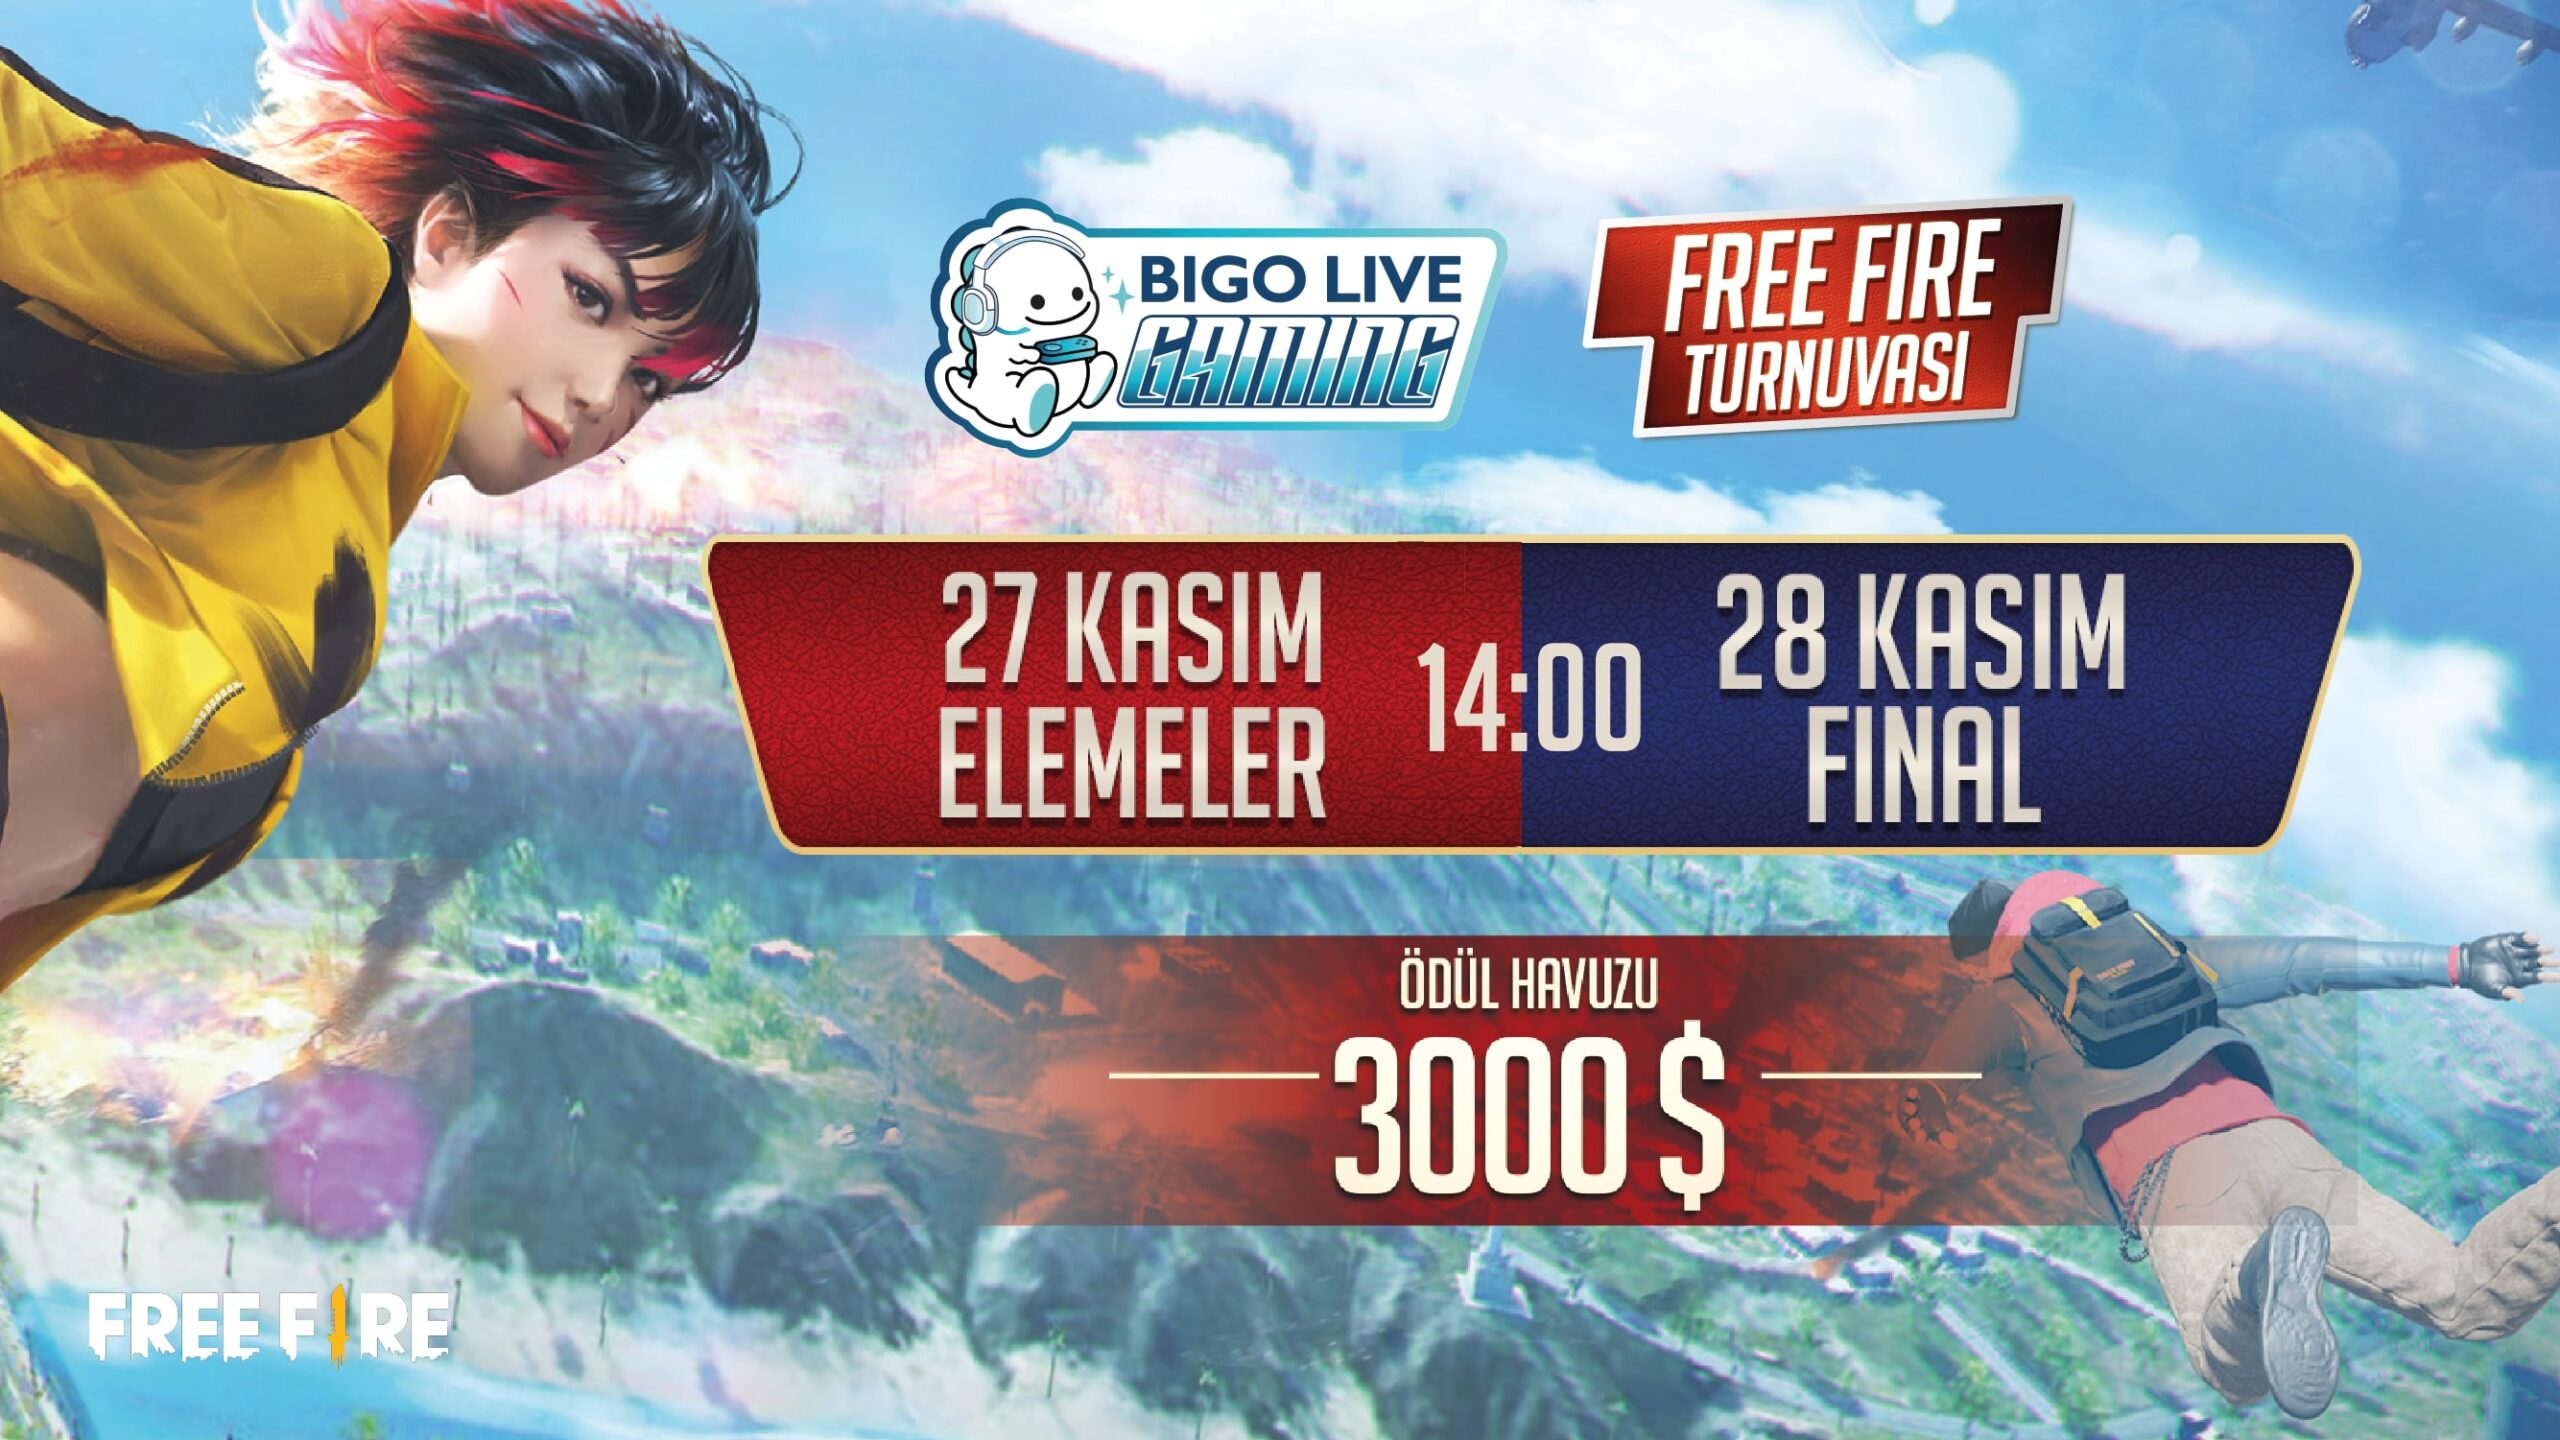 Bigo Live Gaming TR, 2. Free Fire Turnuvasını Duyurdu! esportimes